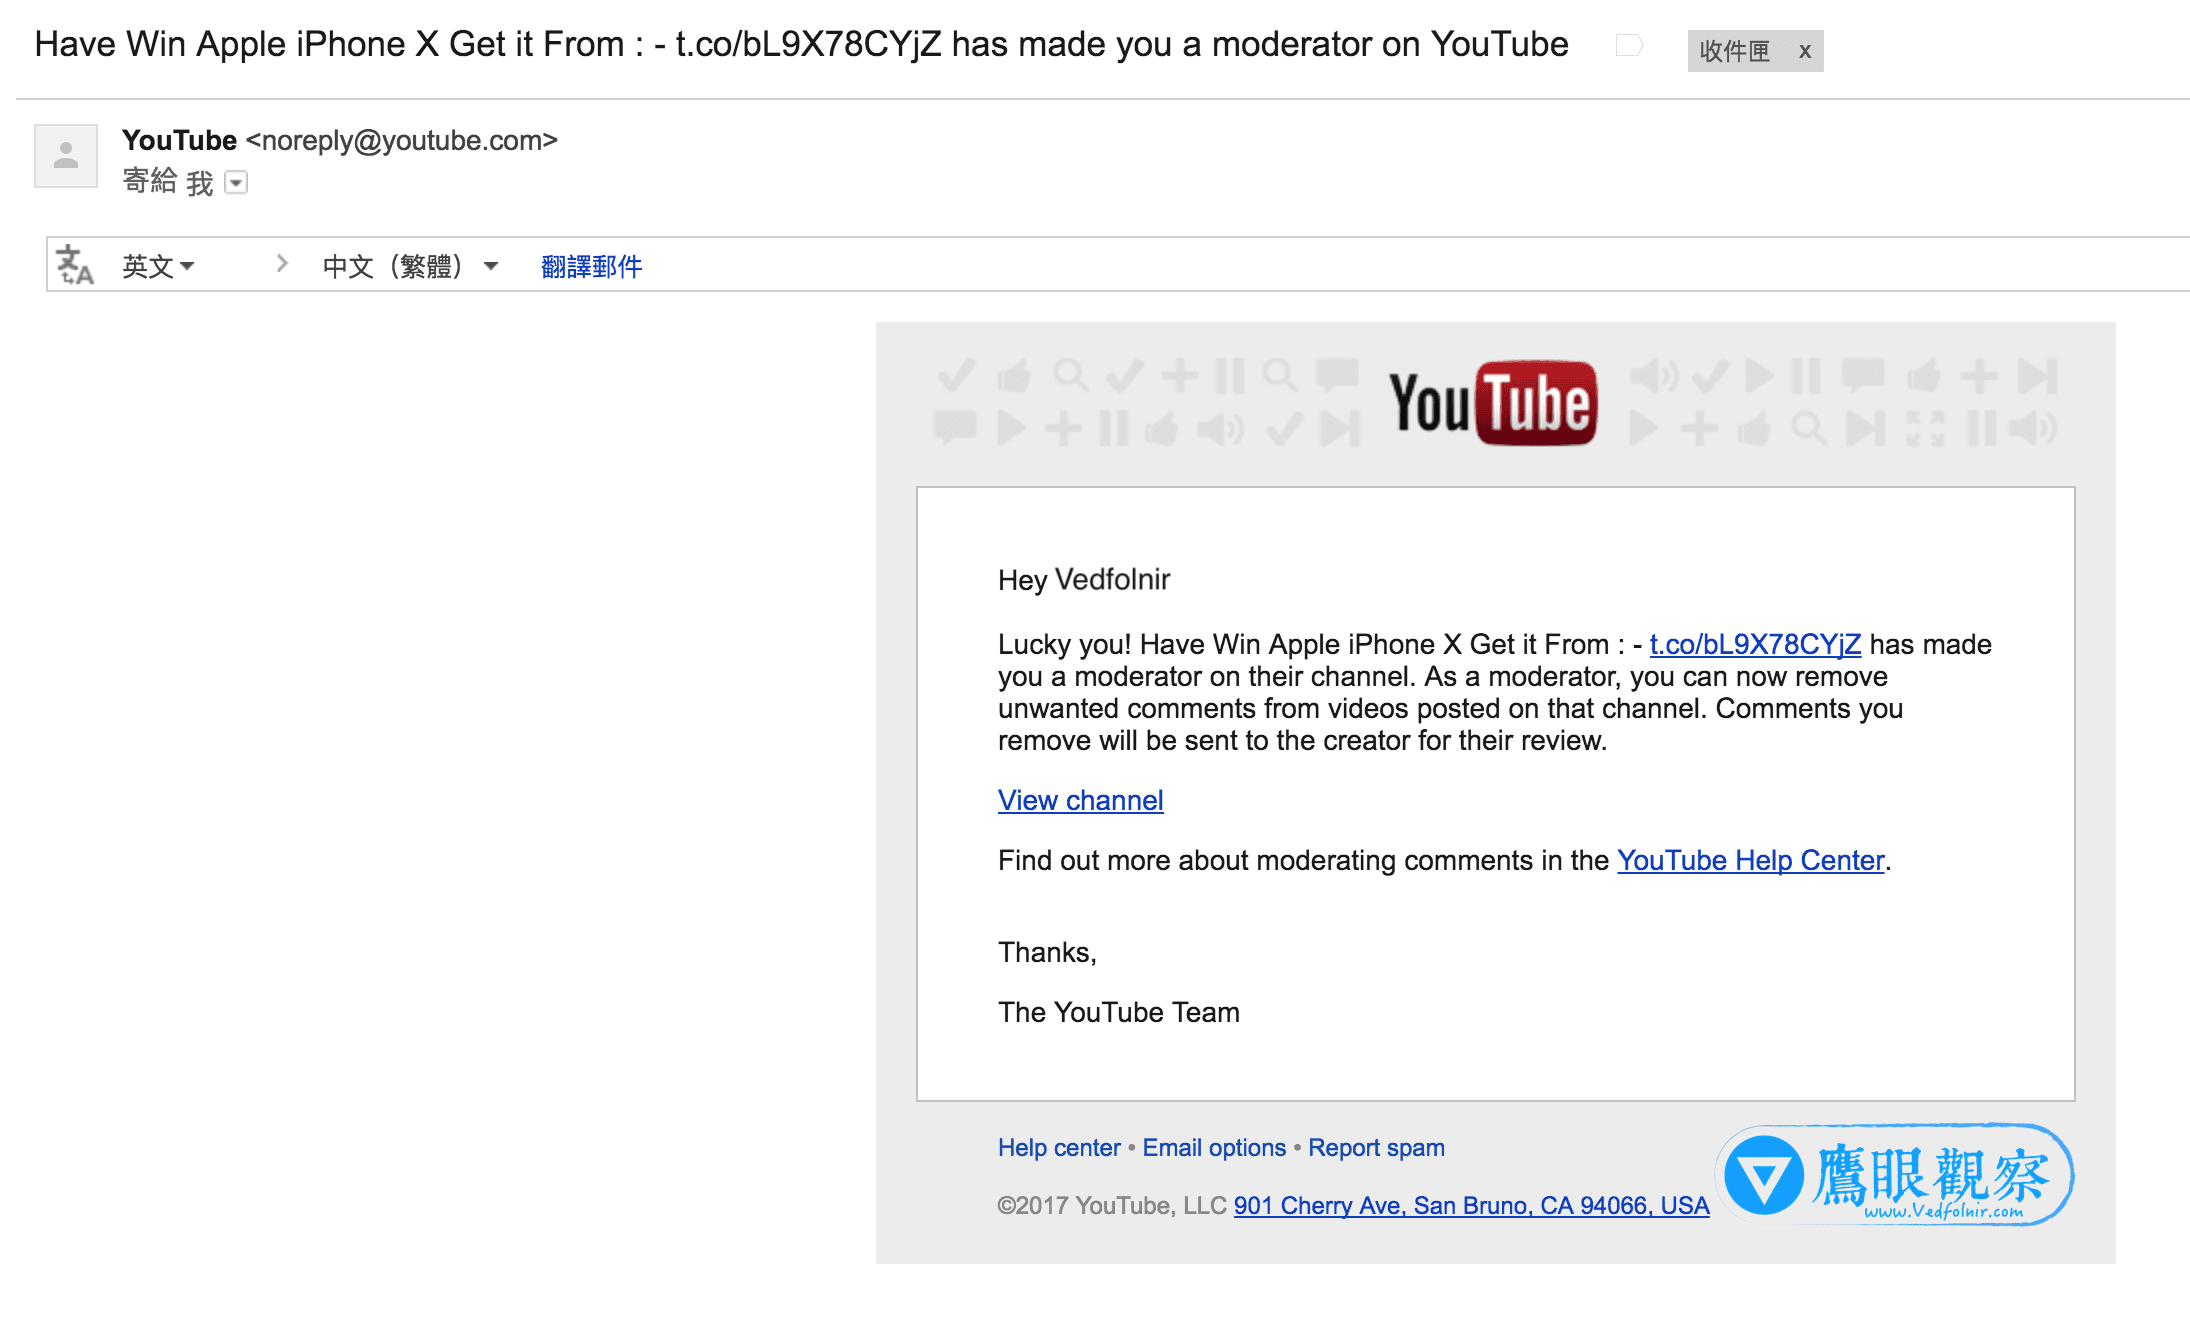 YouTube 寄出 Apple iPhone X 獲獎通知郵件的網路詐騙手法揭露 Youtube Scam Free Apple iPhone X Spam